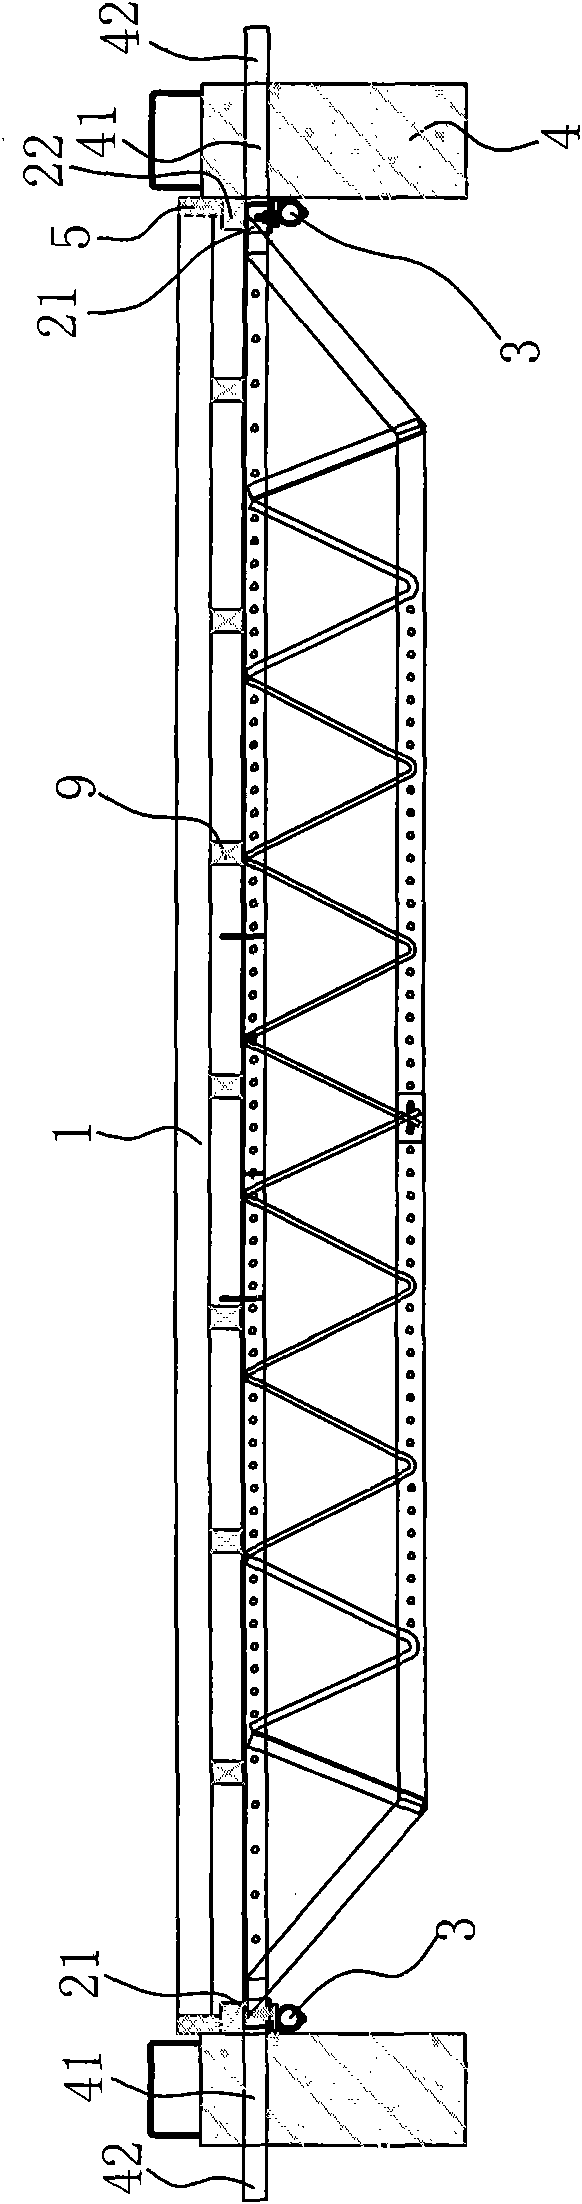 Long-slab-span prefabricated beam floor formwork system